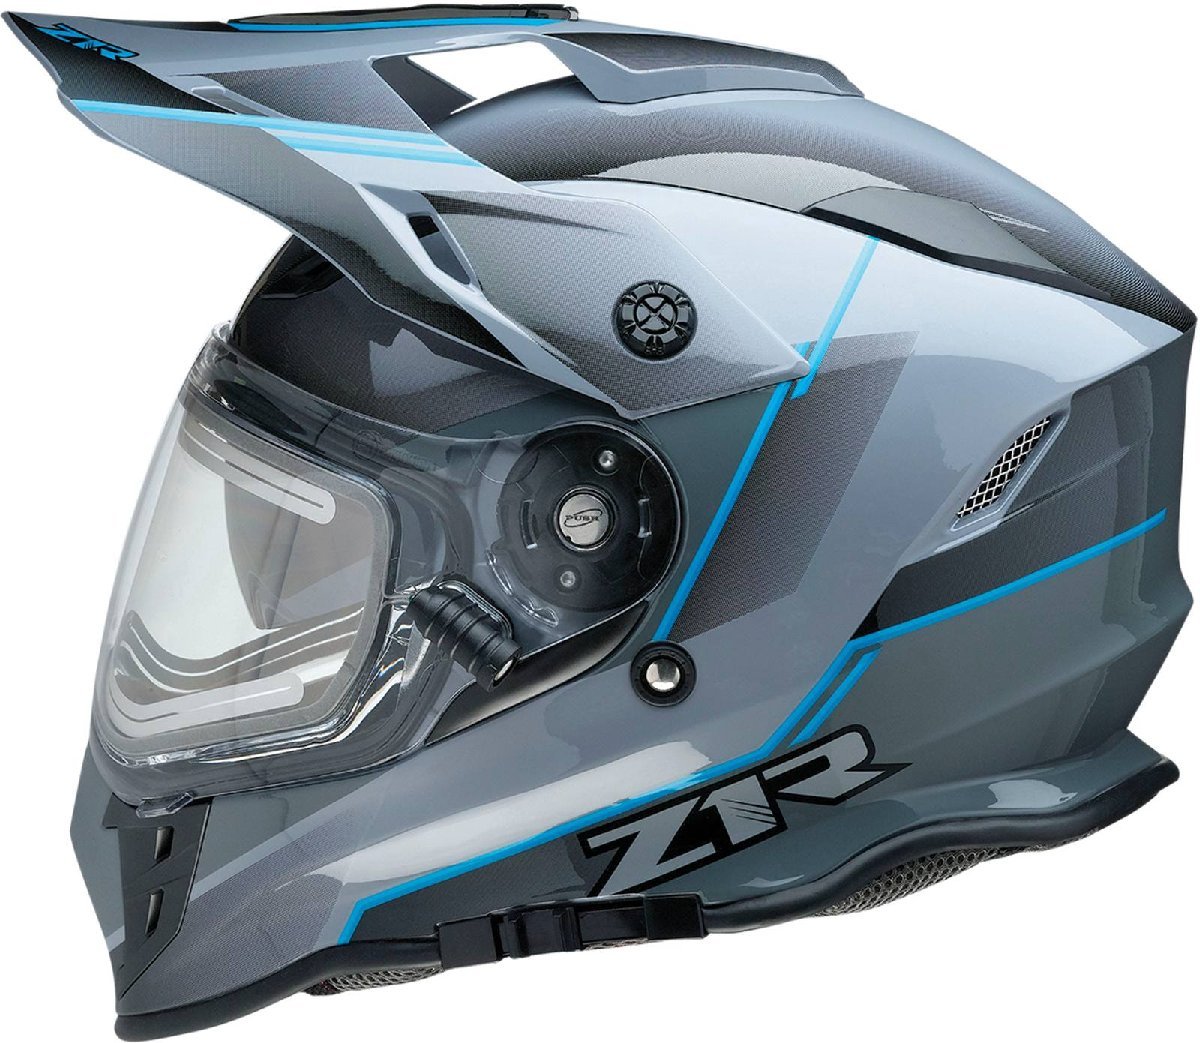 Lサイズ - グレー/ブラック/ブルー - Z1R Range Bladestorm スノー エレクトリック/電熱シールド付き ヘルメット